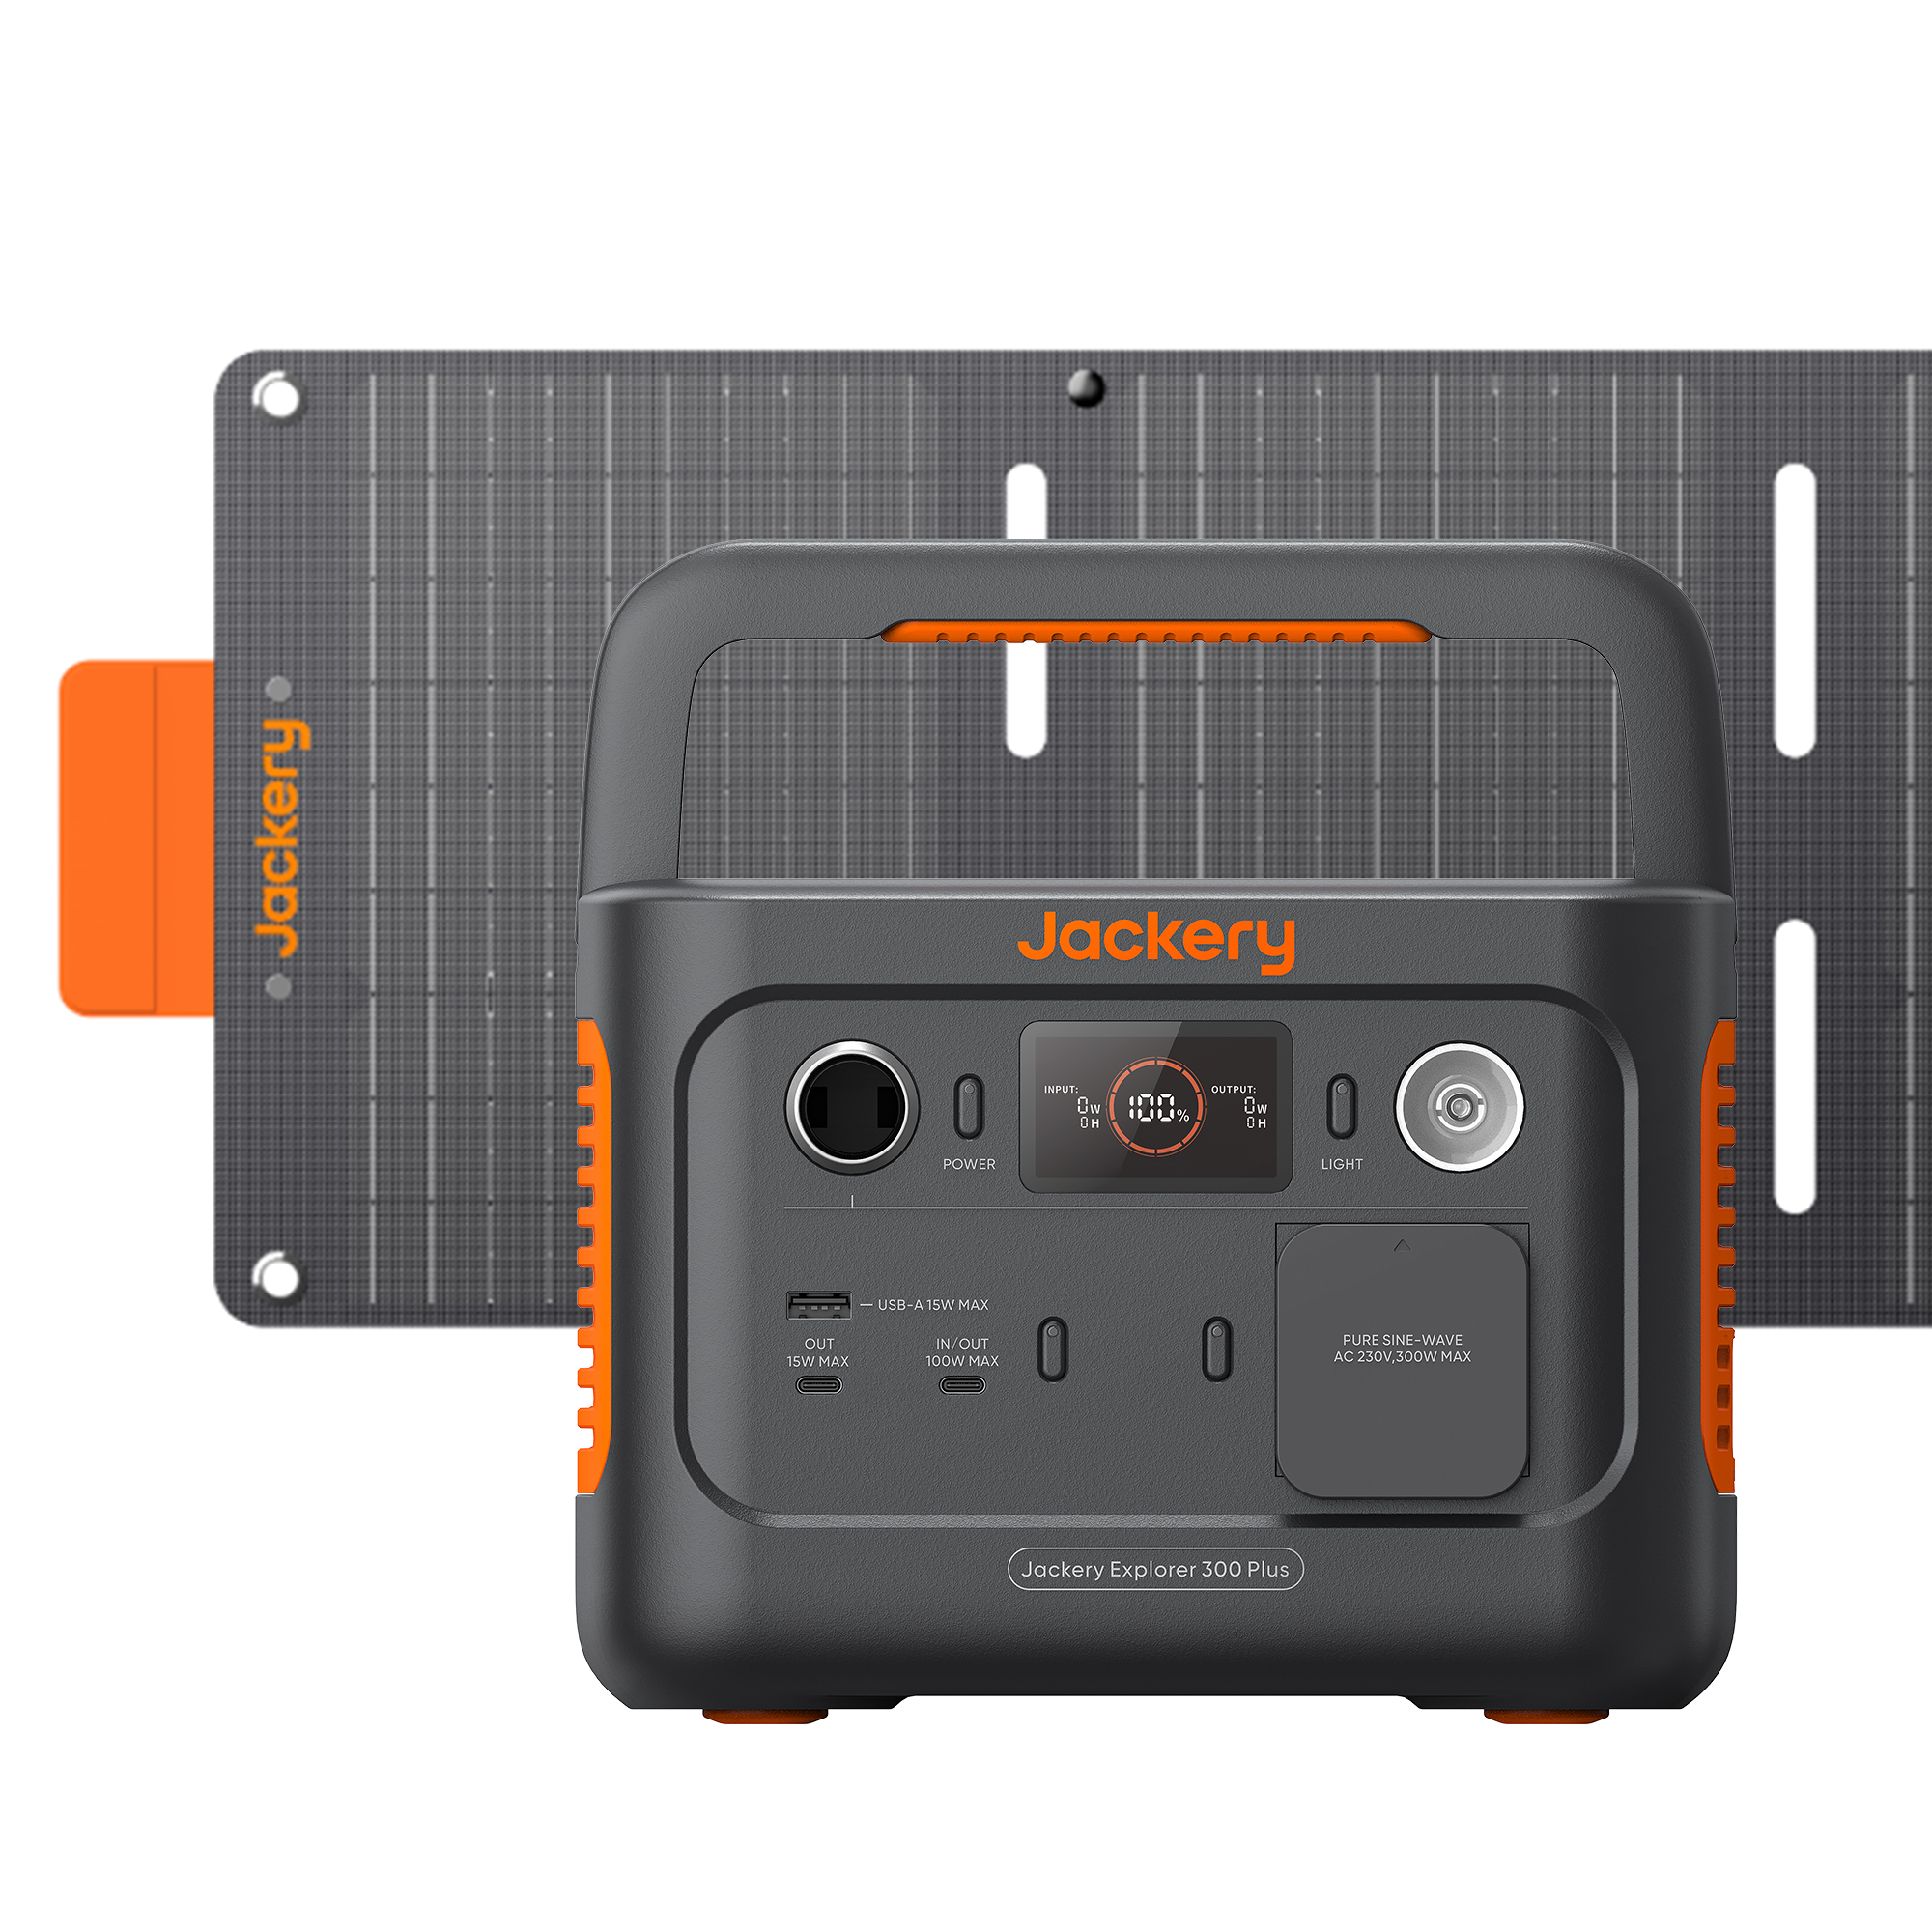 JACKERY Solargenerator 300 Plus 40W 288Wh mit 40W Buchgröße Stromzeuger 288Wh Schwarz+Orange in Solarmodul Mini, Powerstation Tragbares